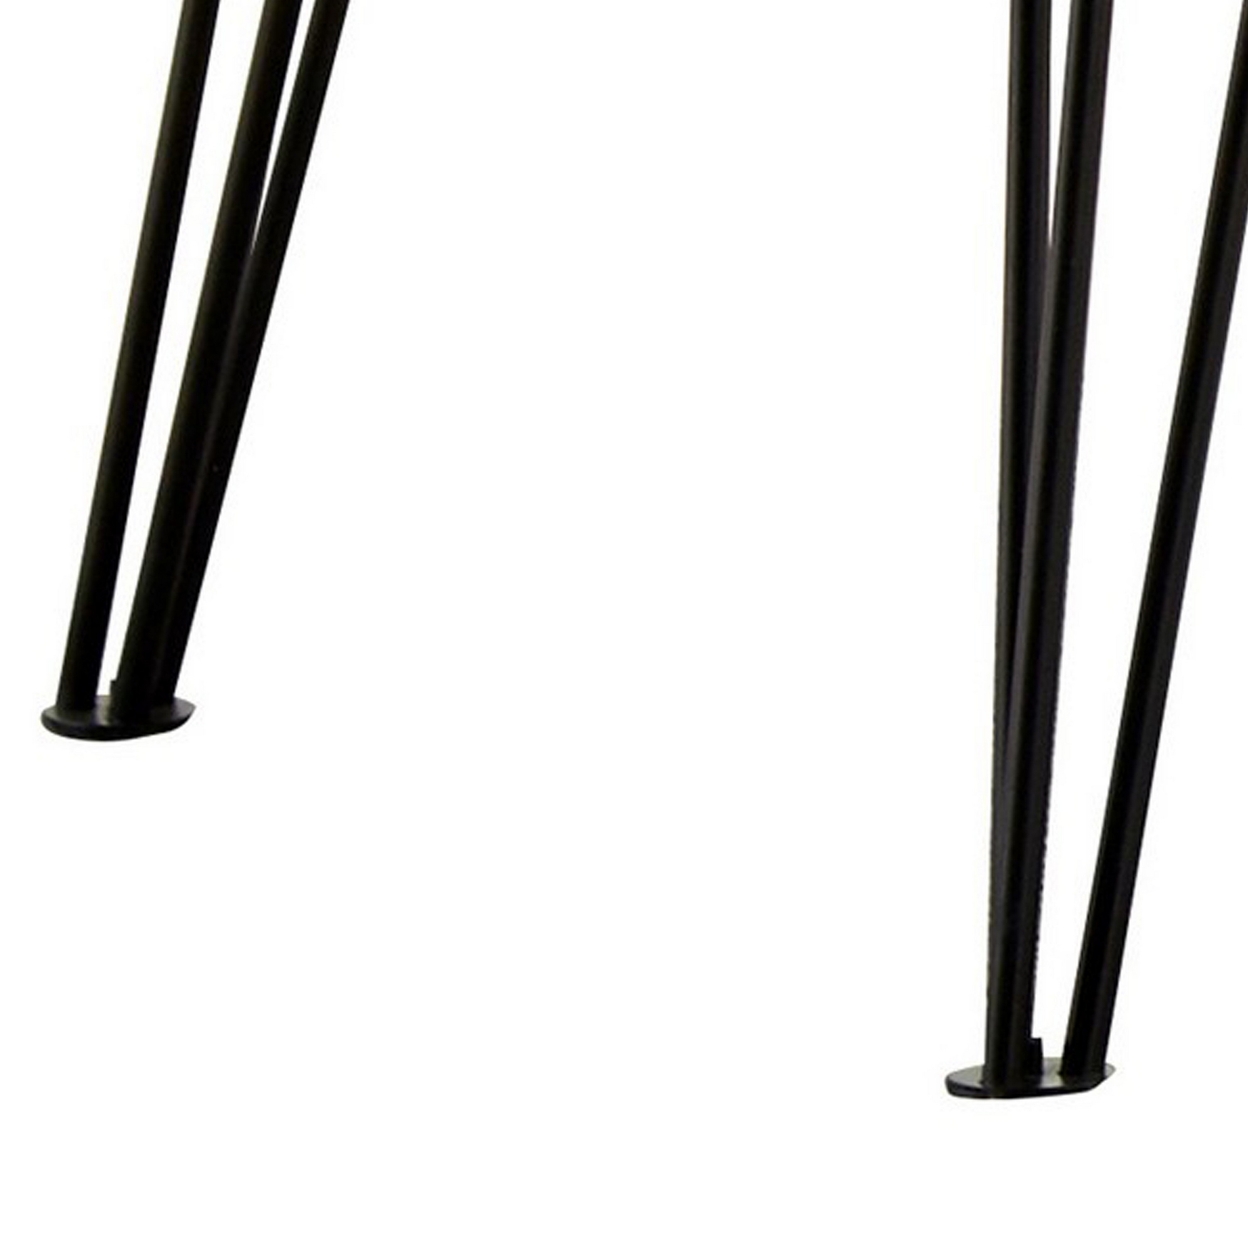 Riz 50 Inch Rectangular Coffee Table, Live Edge, Black Iron Hairpin Legs- Saltoro Sherpi